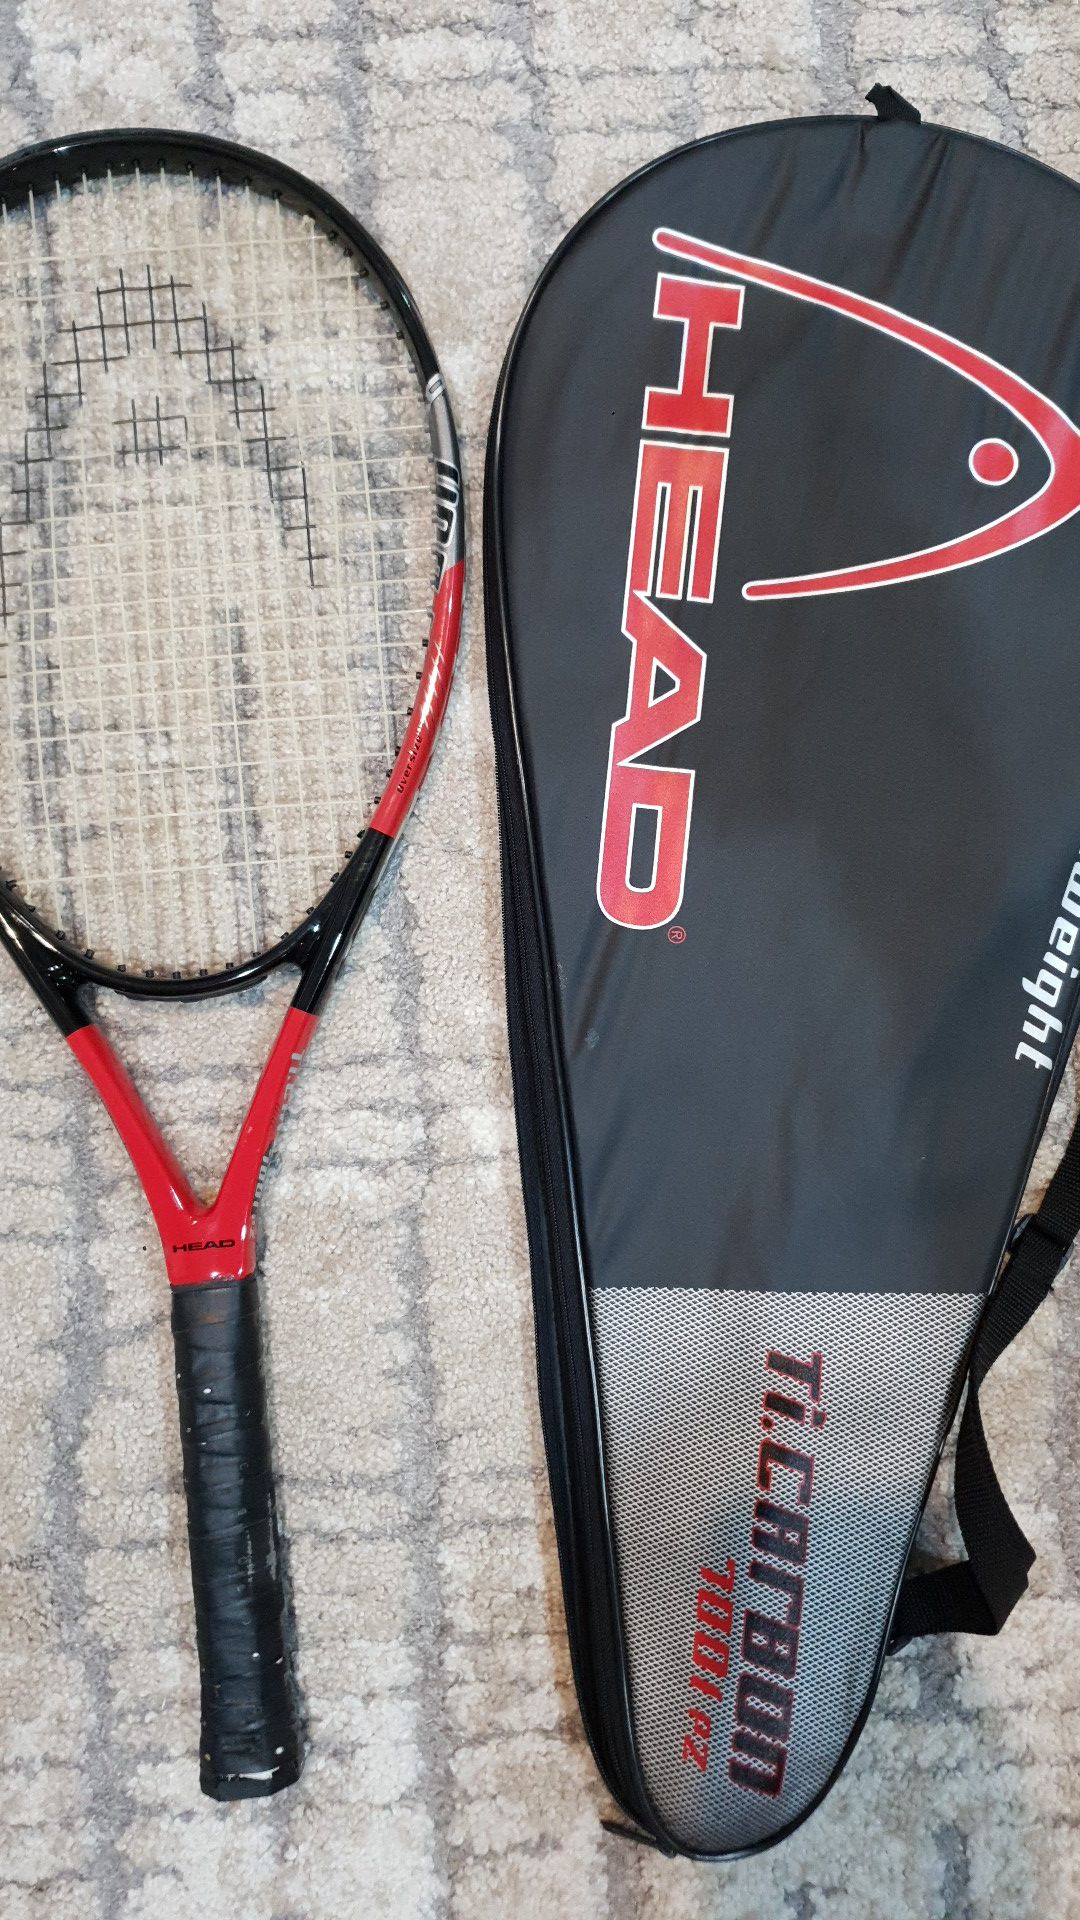 Tennis racket with bag Head ti carbon 7001 pz